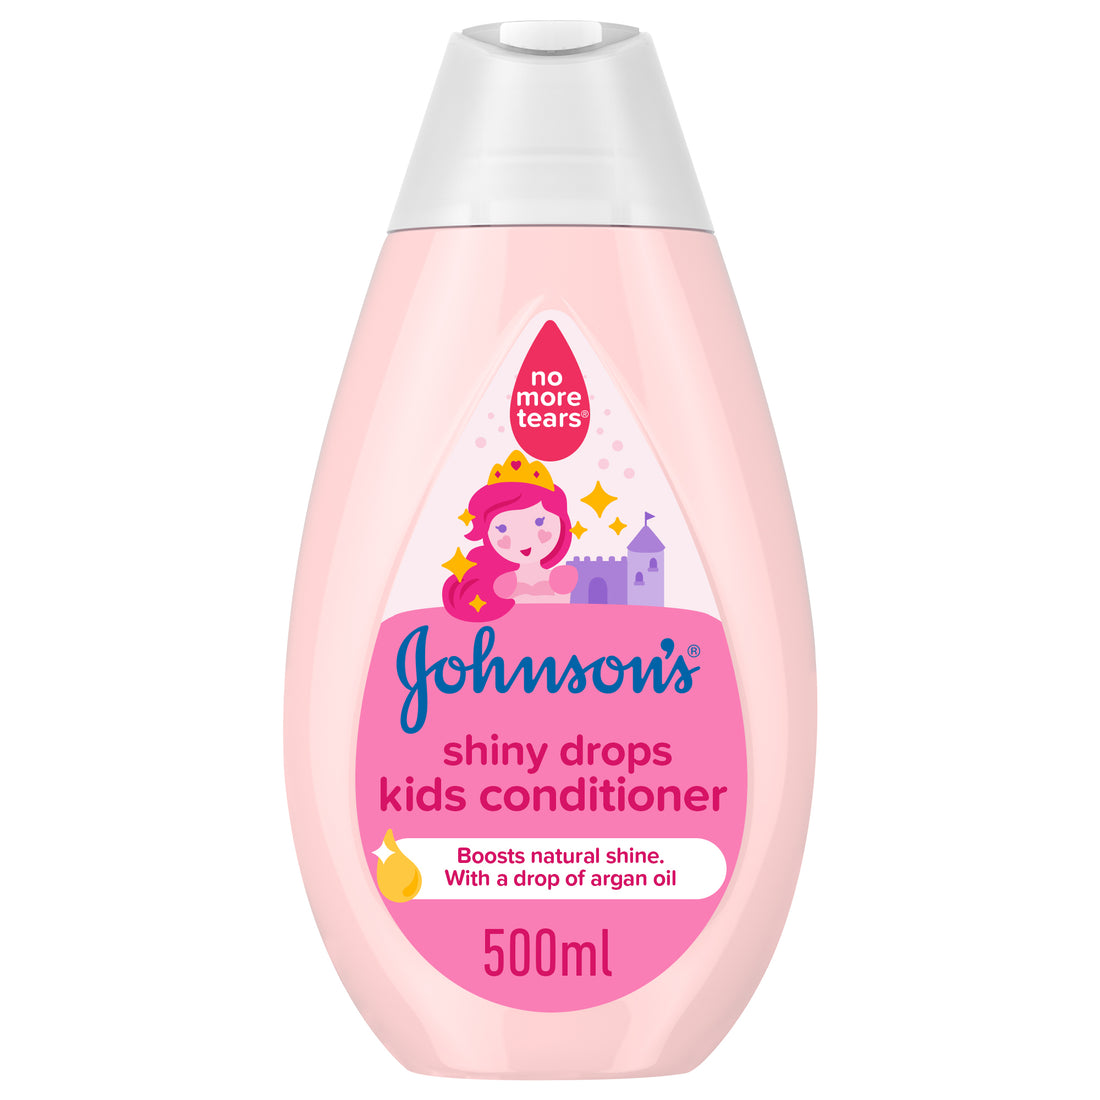 JOHNSON’S Kids Conditioner - Shiny Drops, 500ml